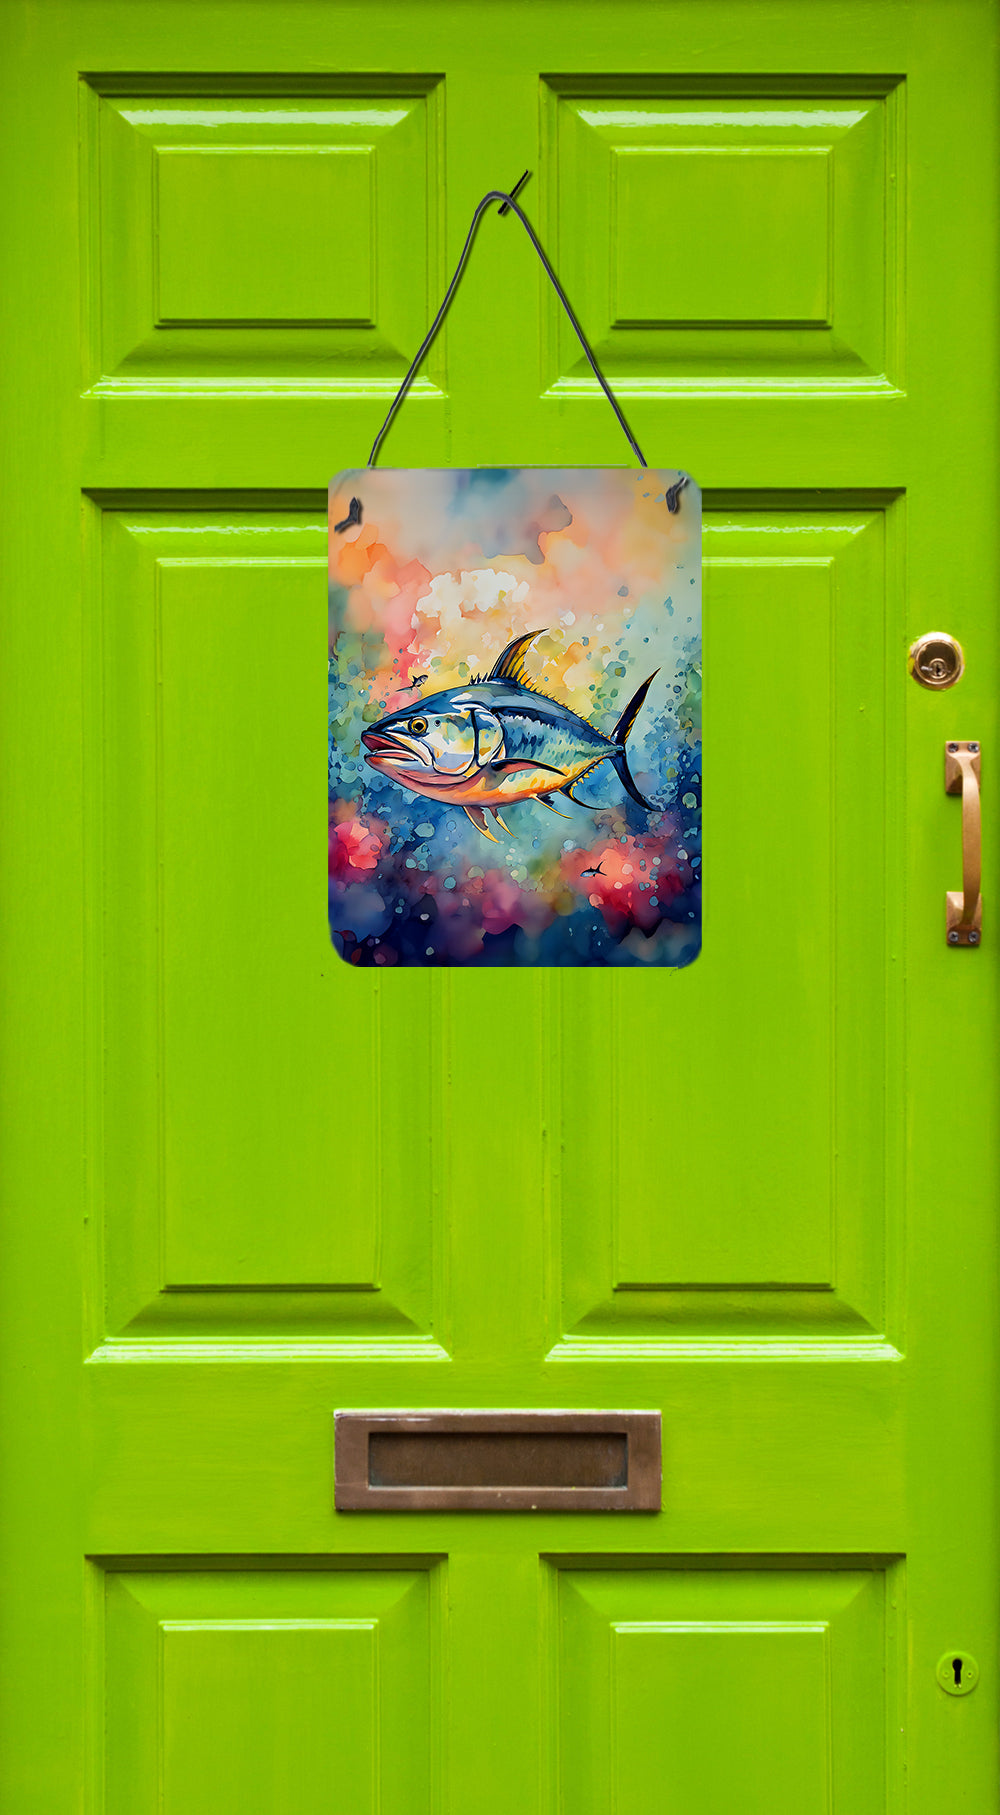 Buy this Yellowfin Tuna Wall or Door Hanging Prints